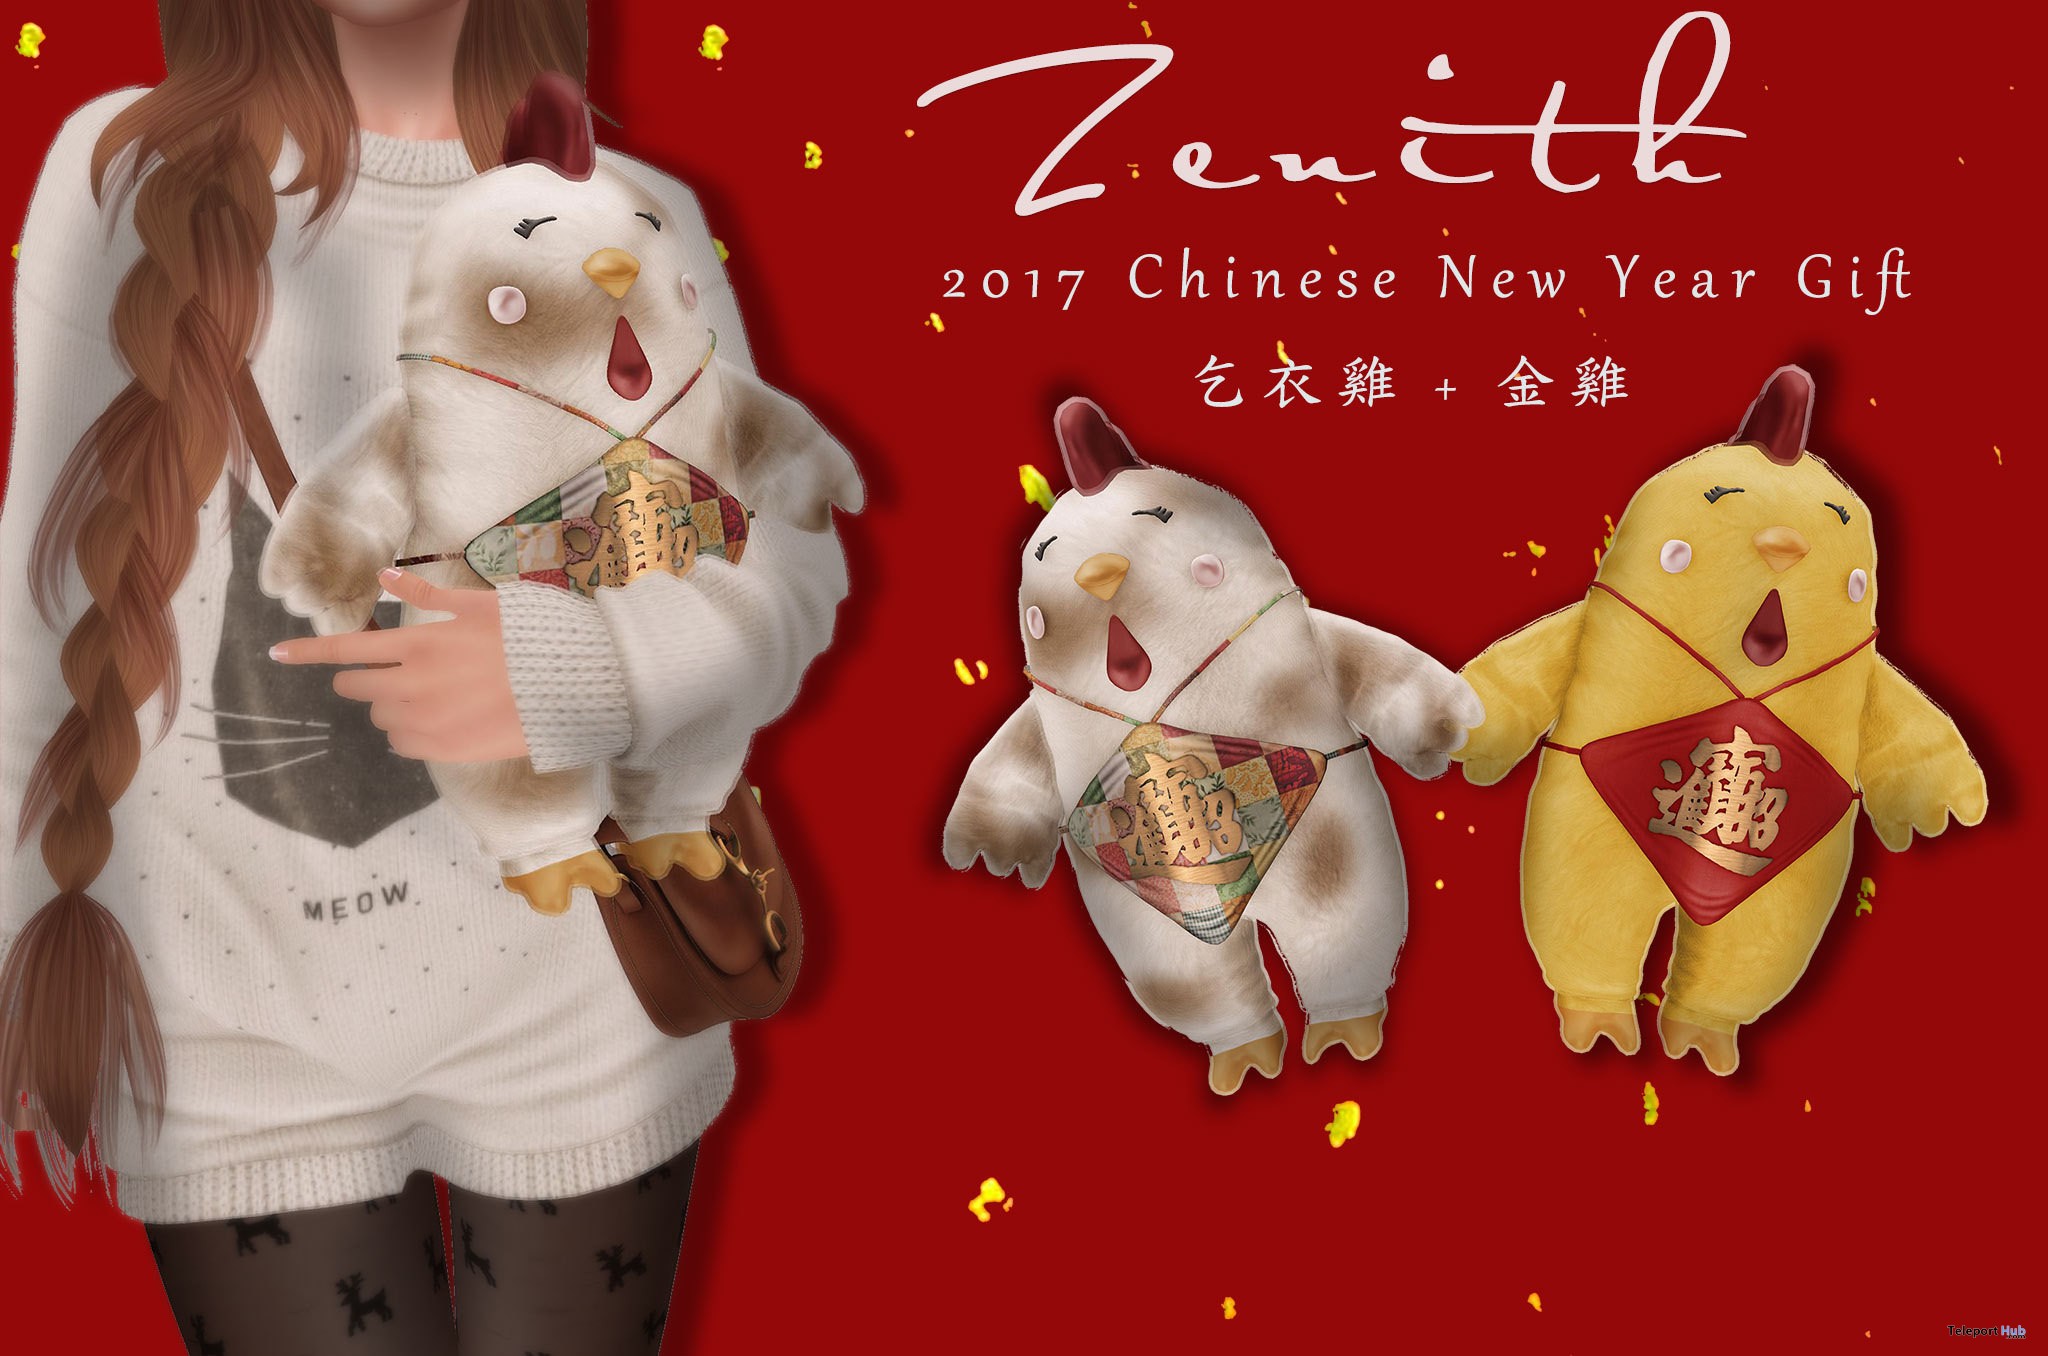 Jin Ji  & Qiyiji 2017 Chinese New Year Group Gift by Zenith - Teleport Hub - teleporthub.com